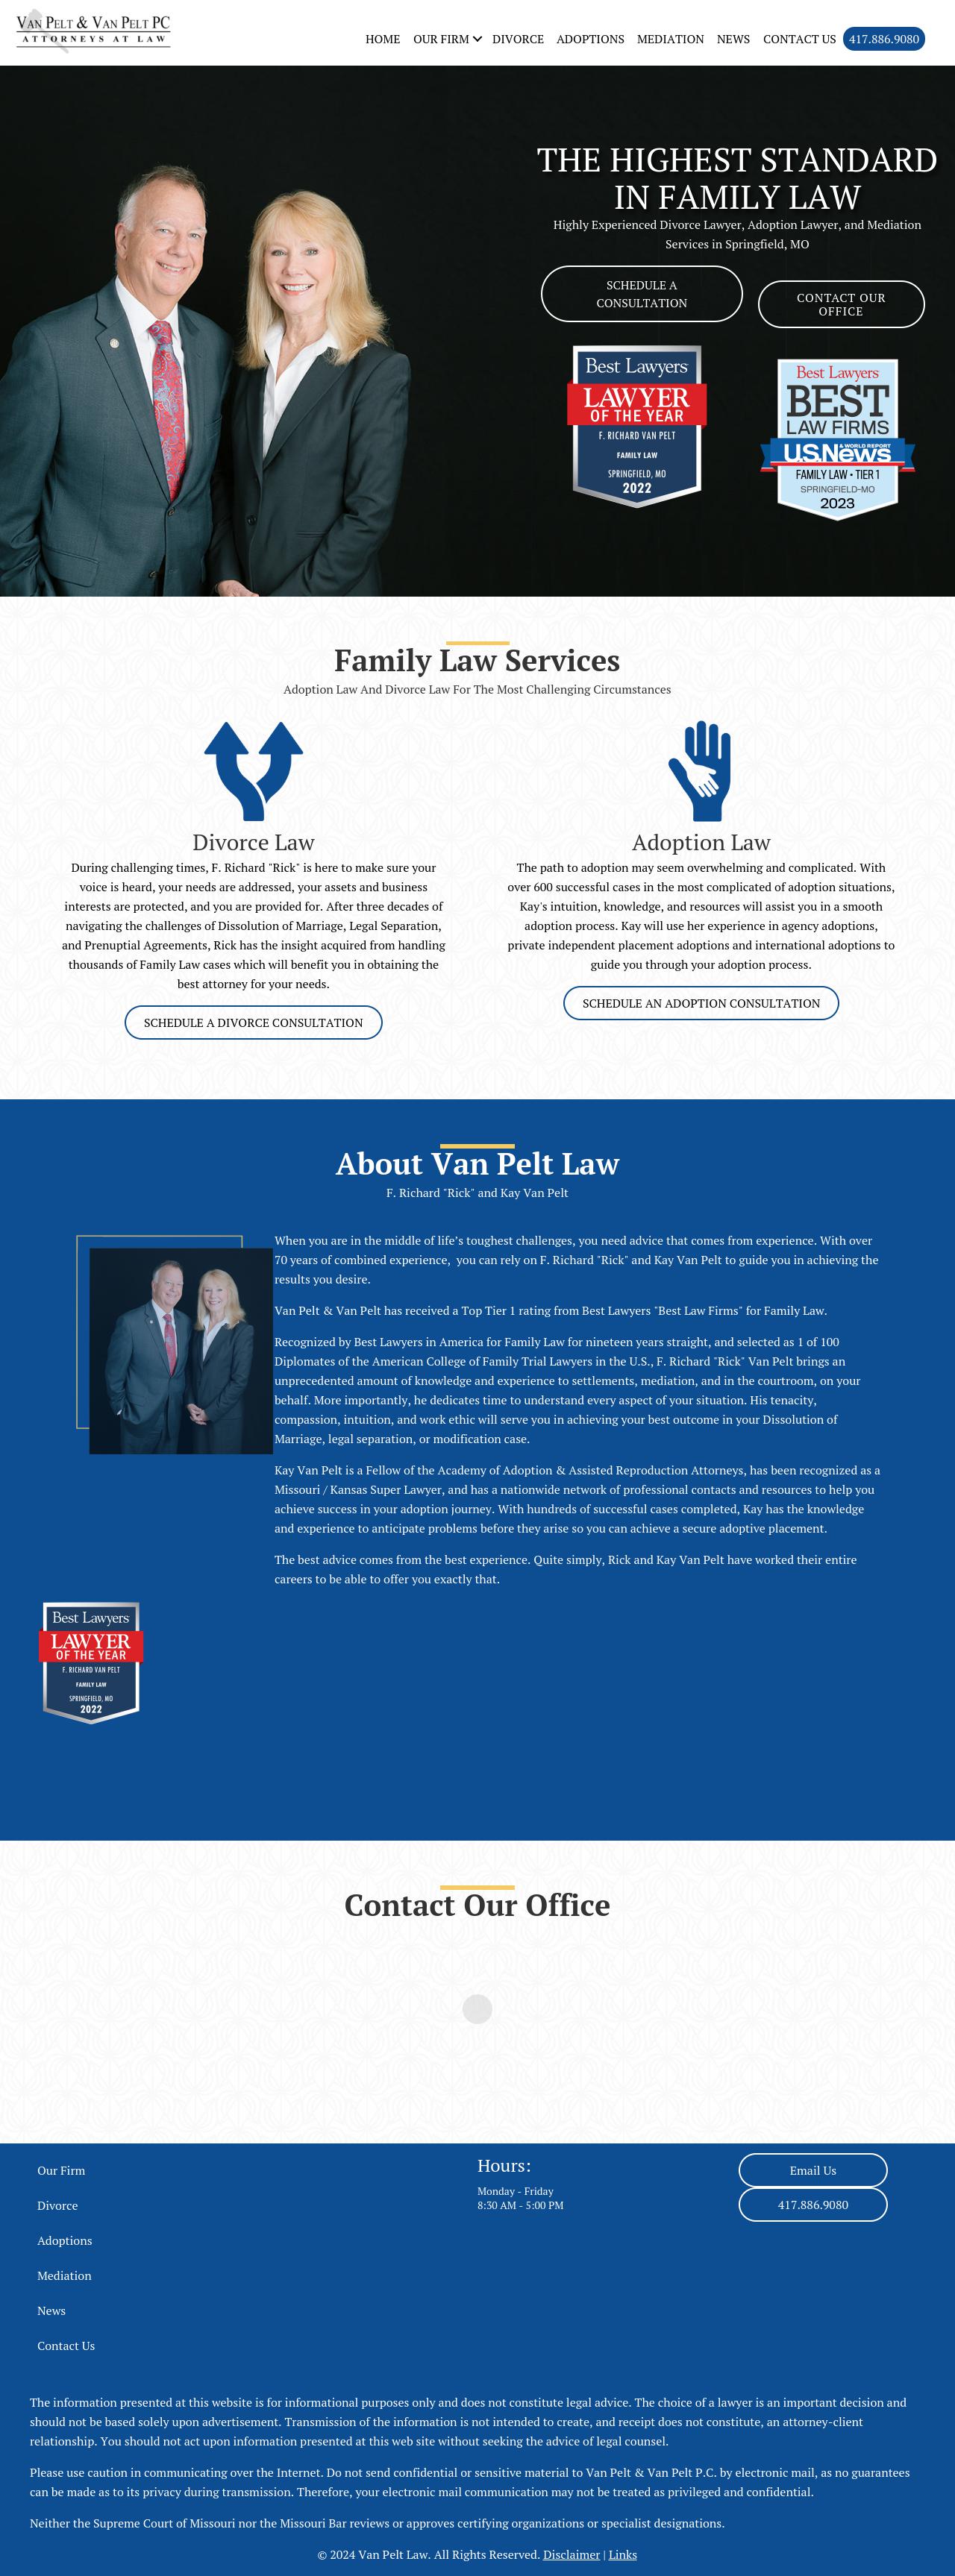 VanPelt & VanPelt, P.C. - Springfield MO Lawyers